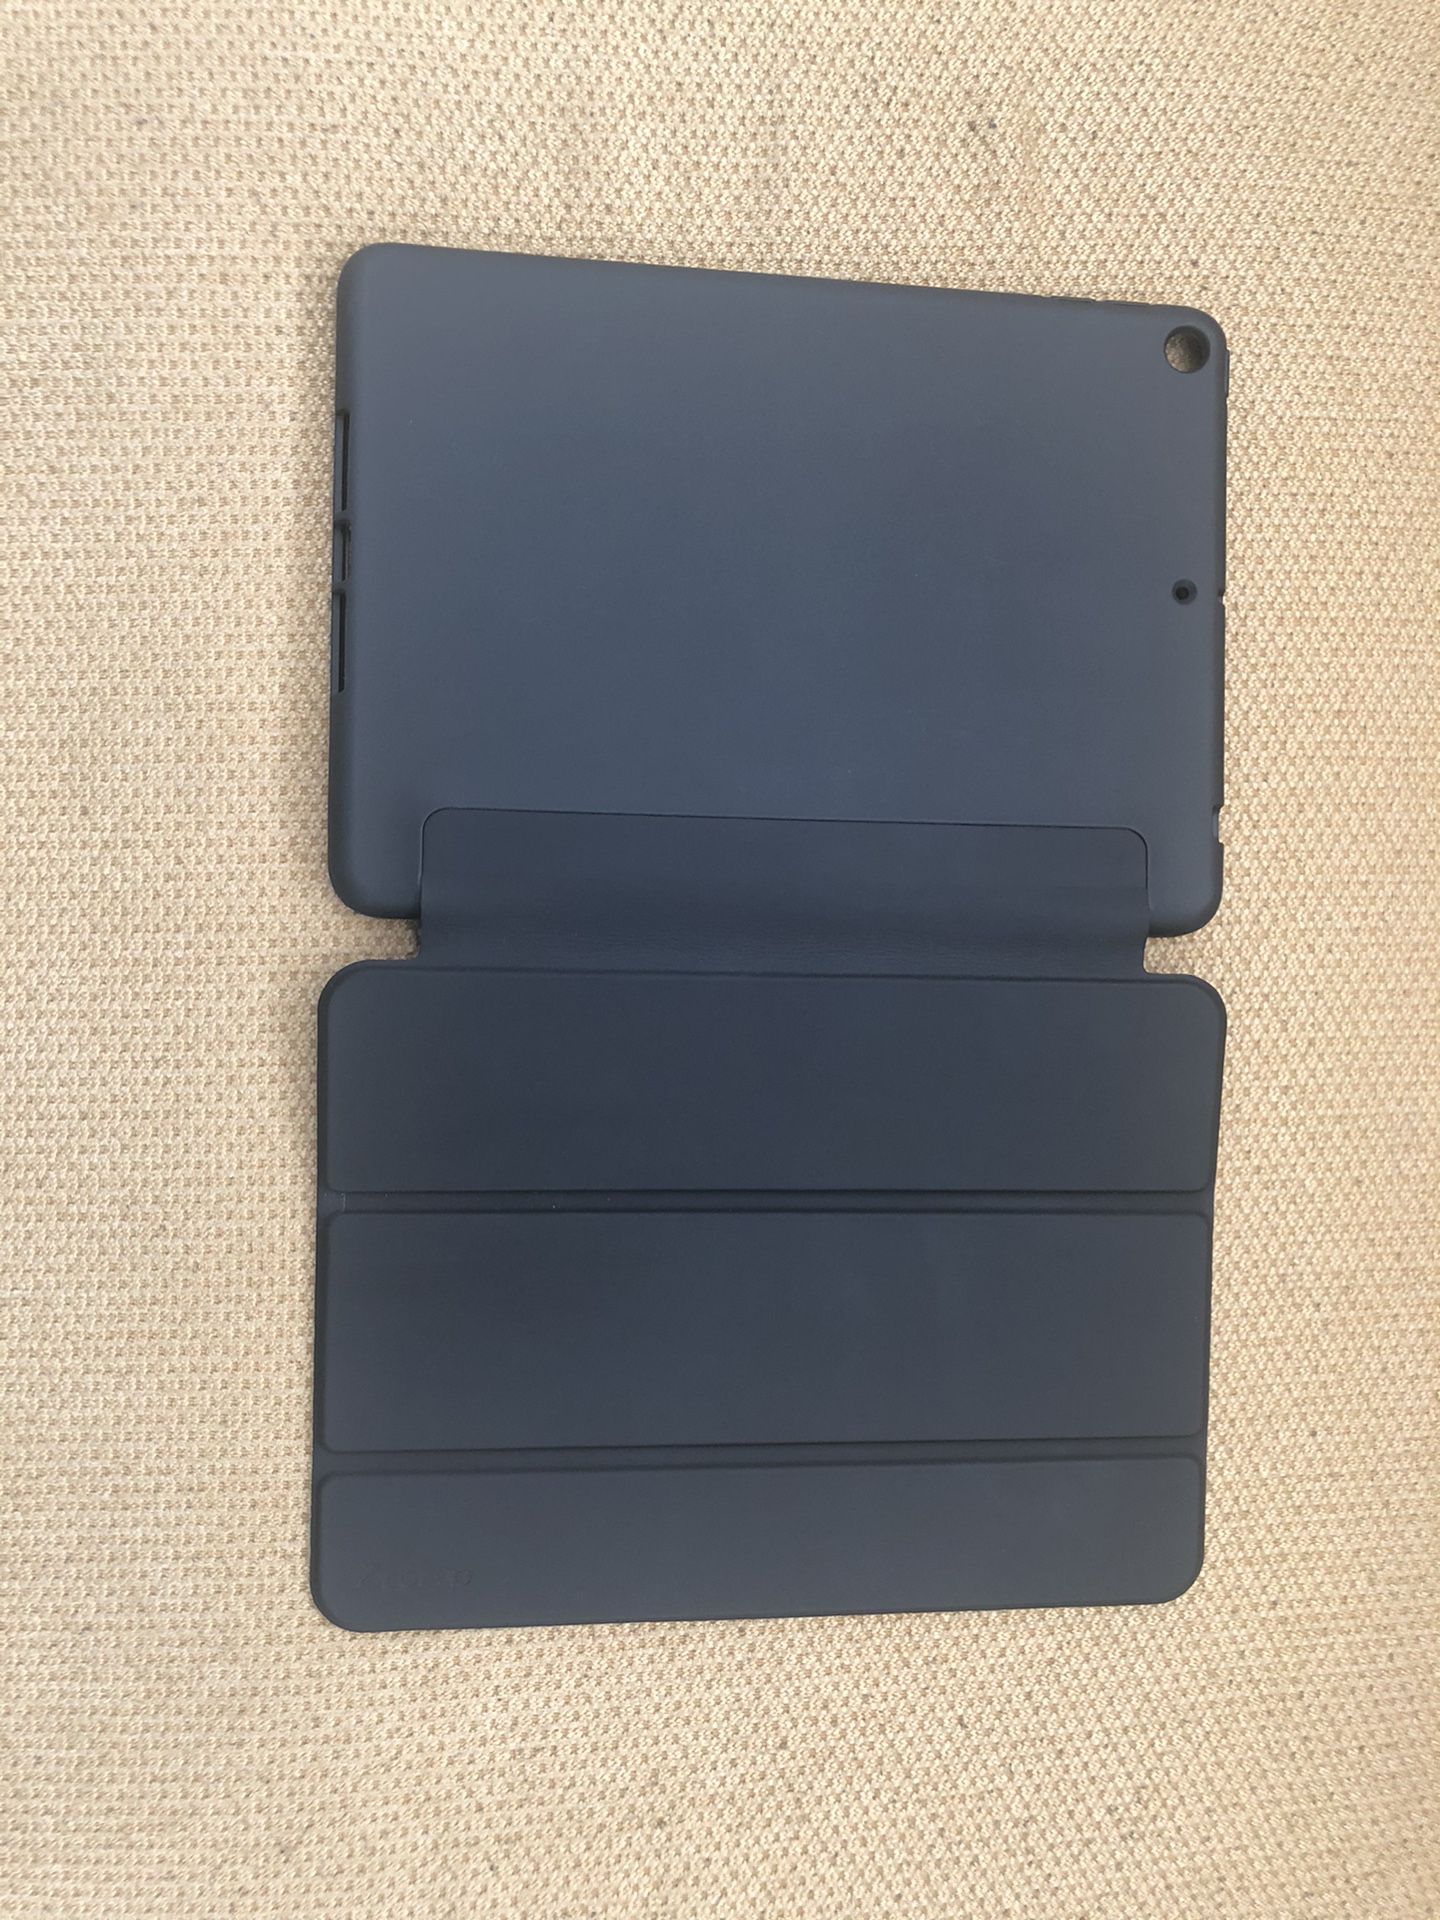 Apple iPad Mini 5 case